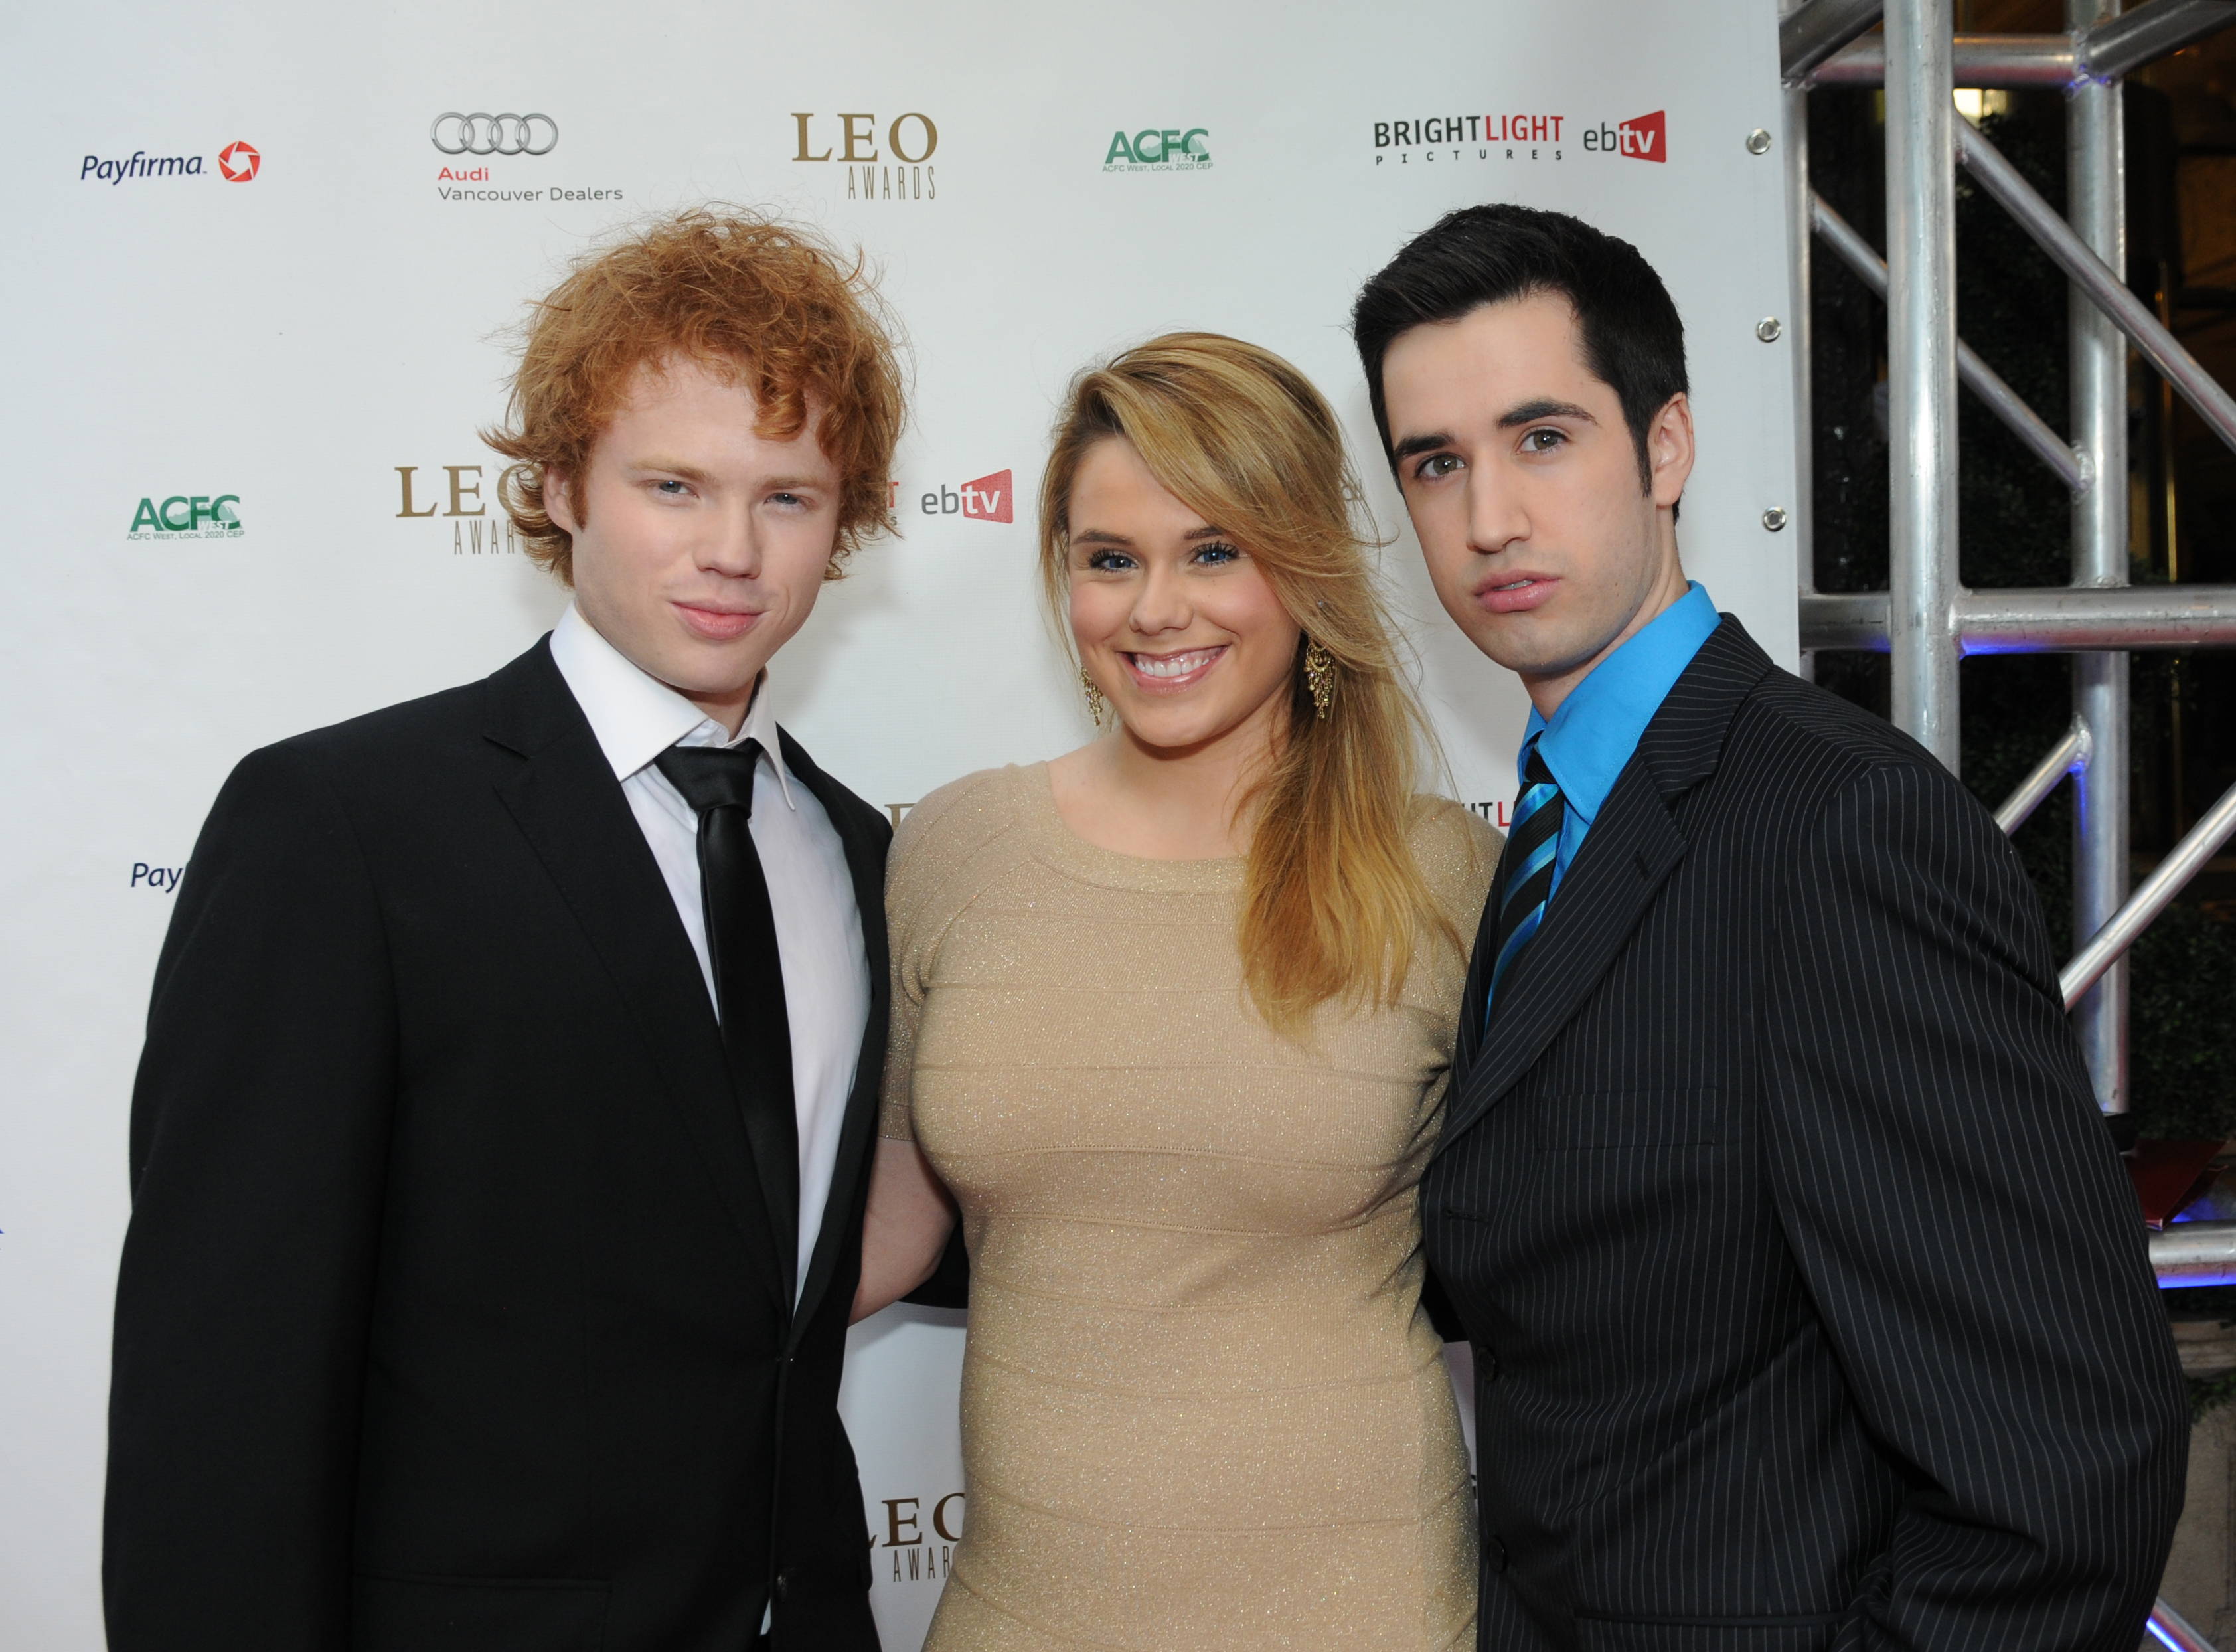 Wesley MacInnes, Mandy Valentine and Julian LeBlanc at the 2011 Leo Awards.